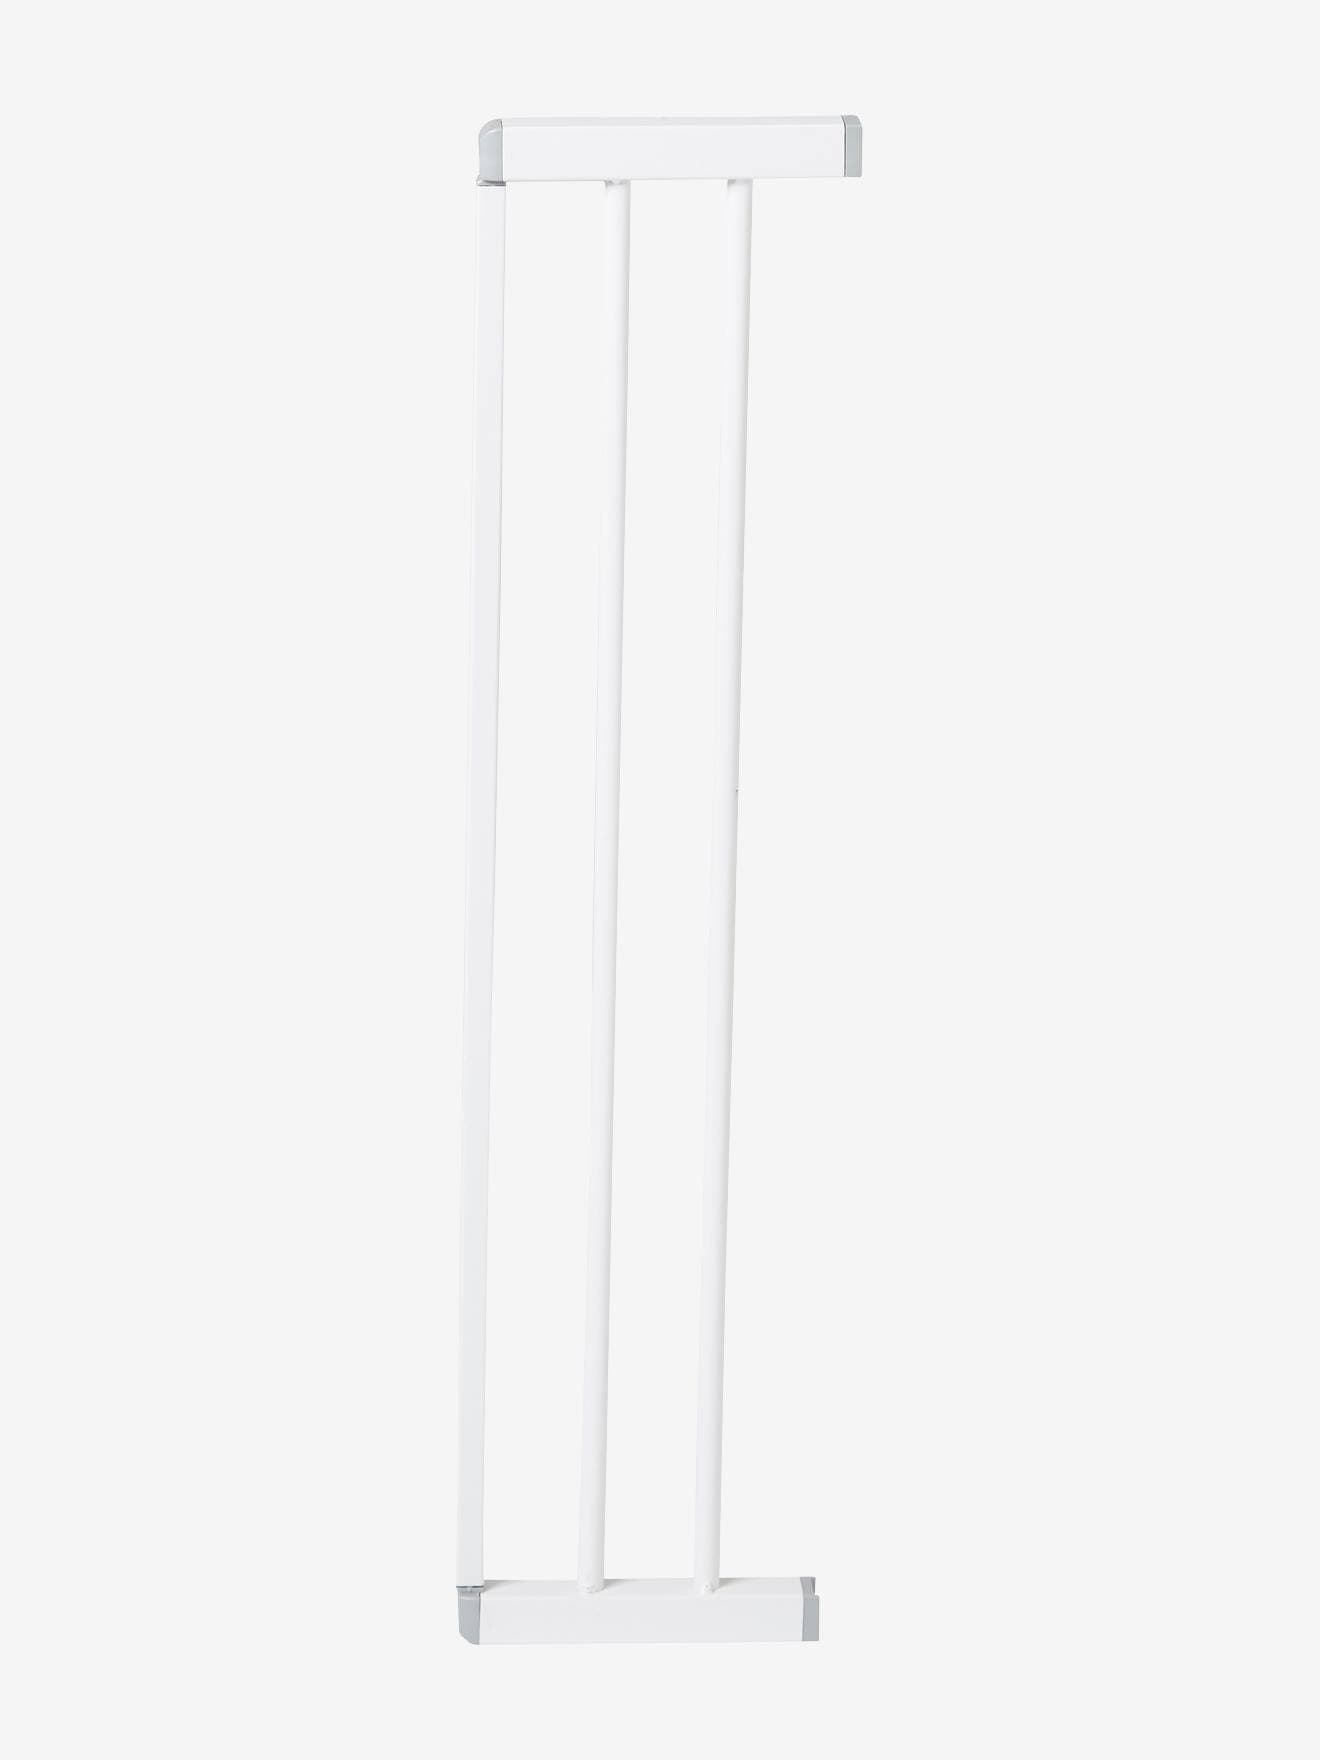 17 cm Extension for Metal Safety Gate, VERTBAUDET white